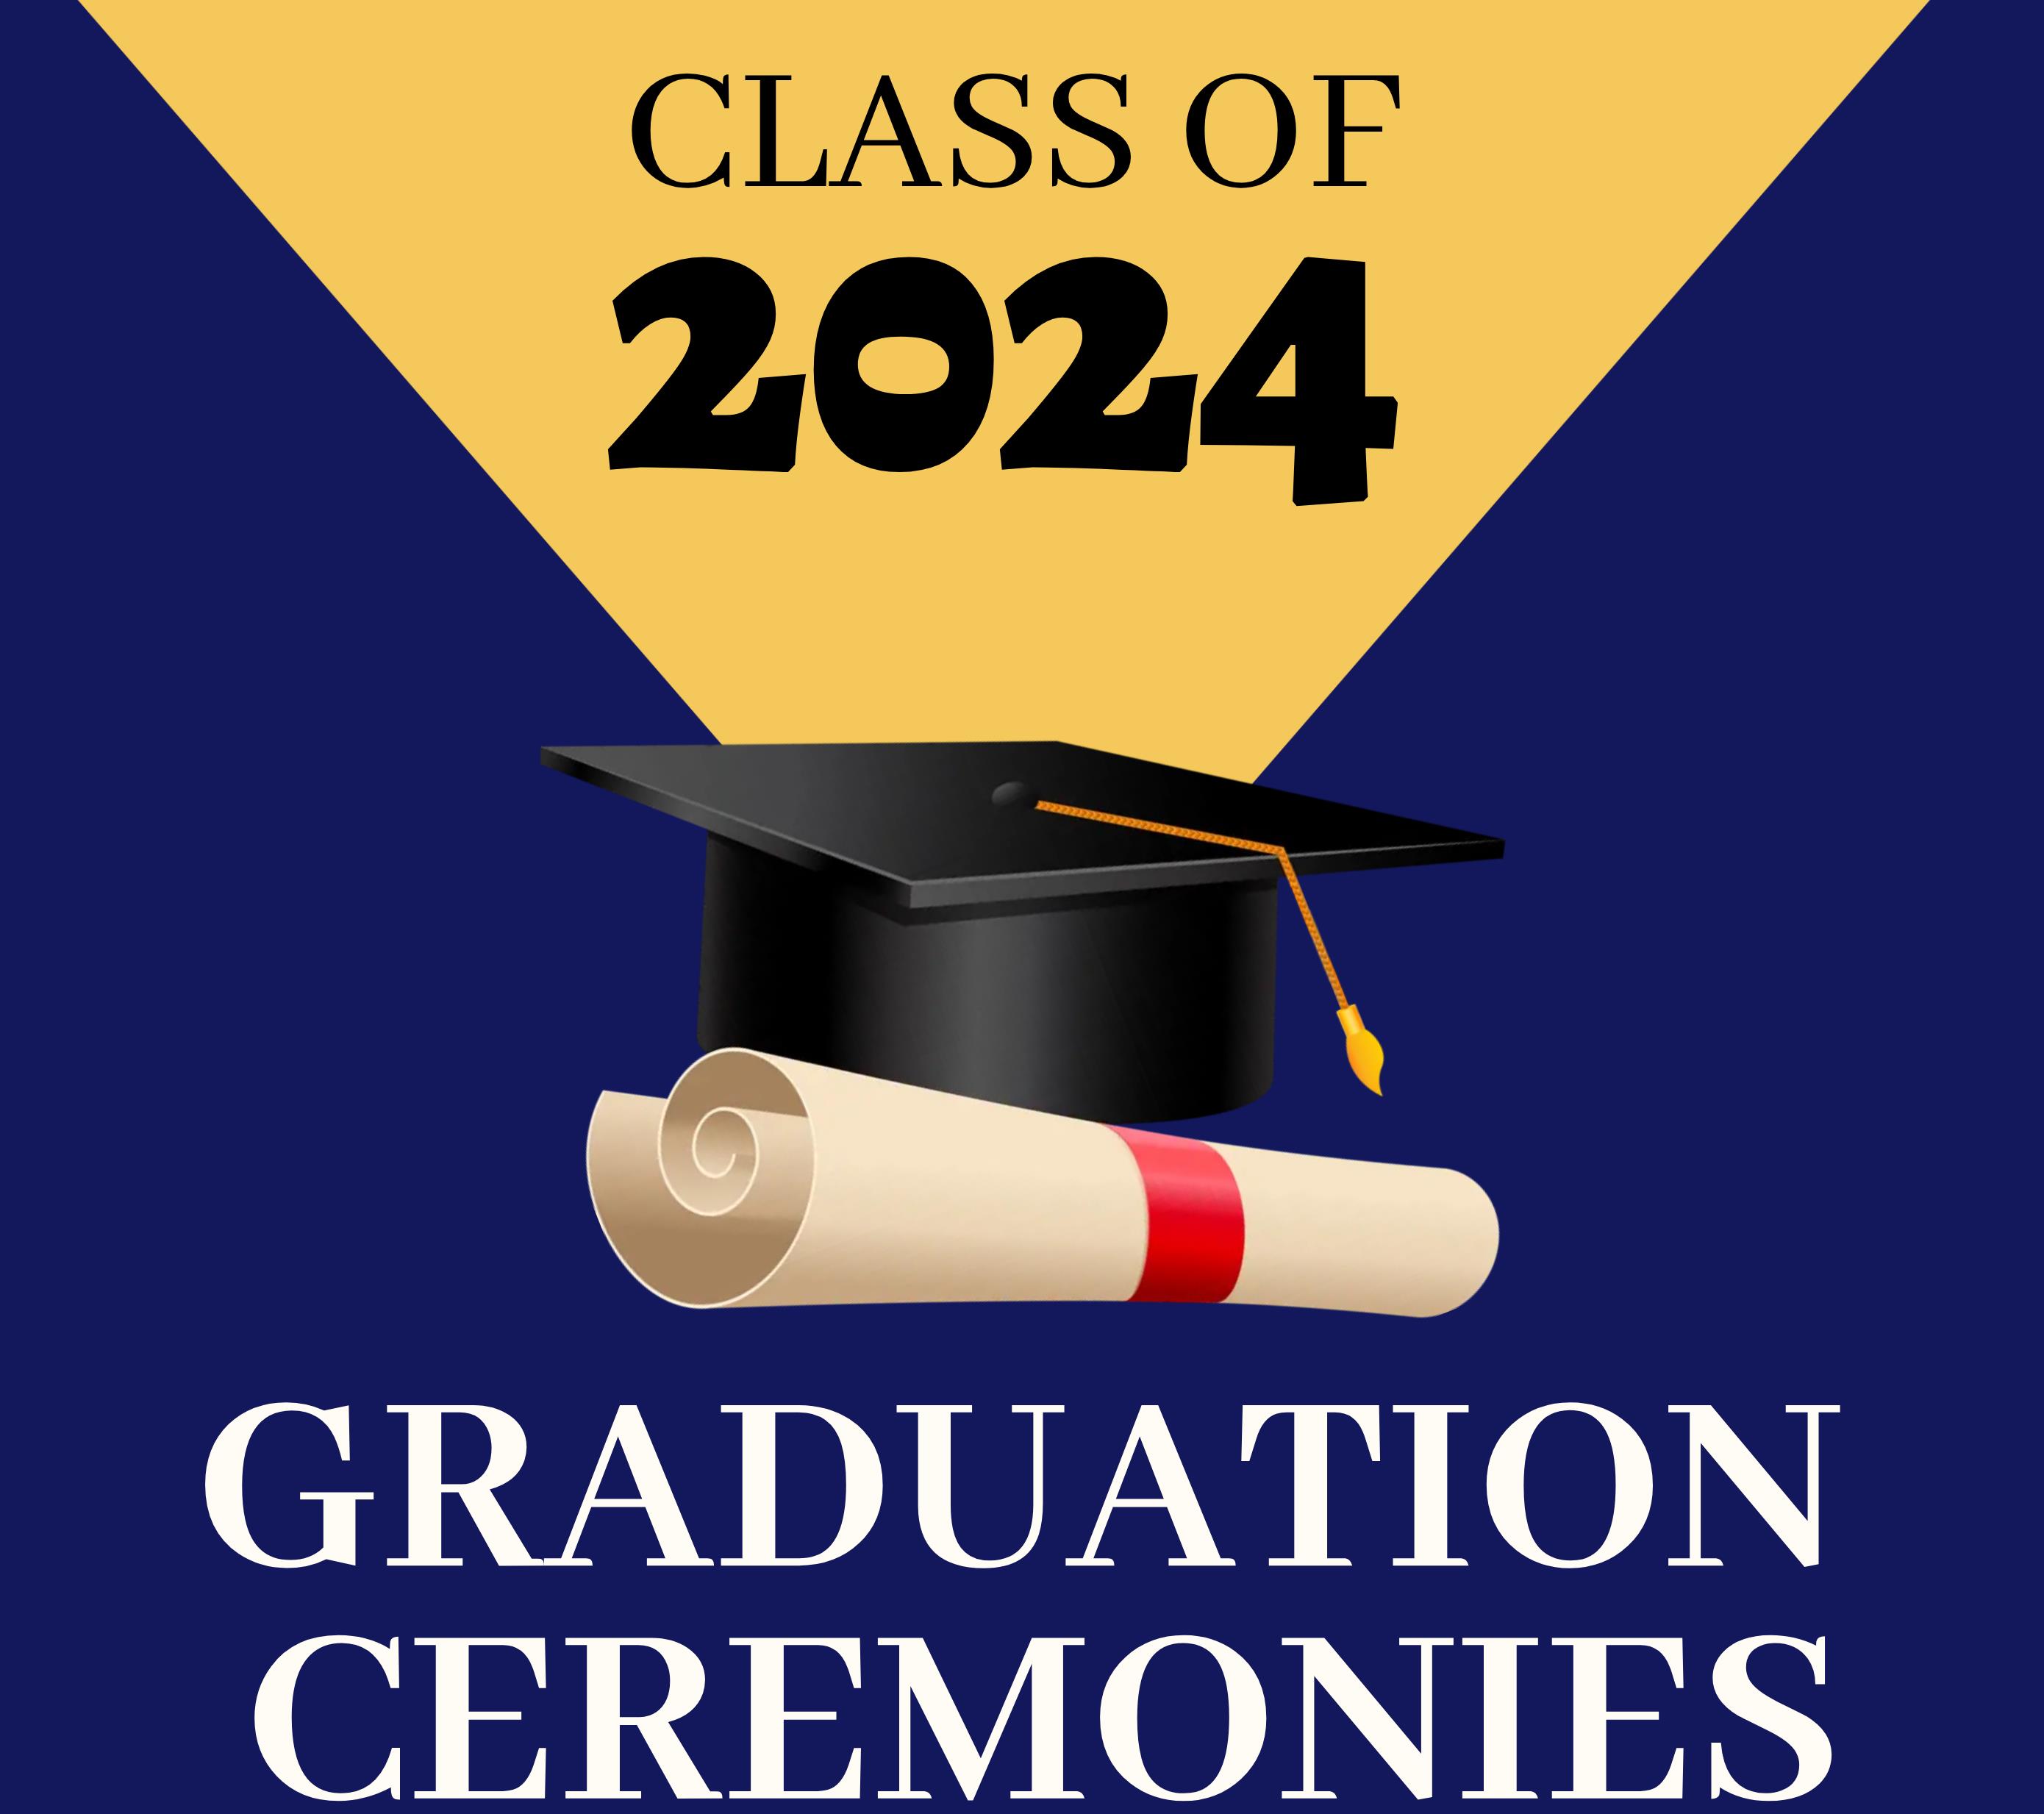 Class of 2024 Graduation Ceremonies. Graduation Cap and Diploma